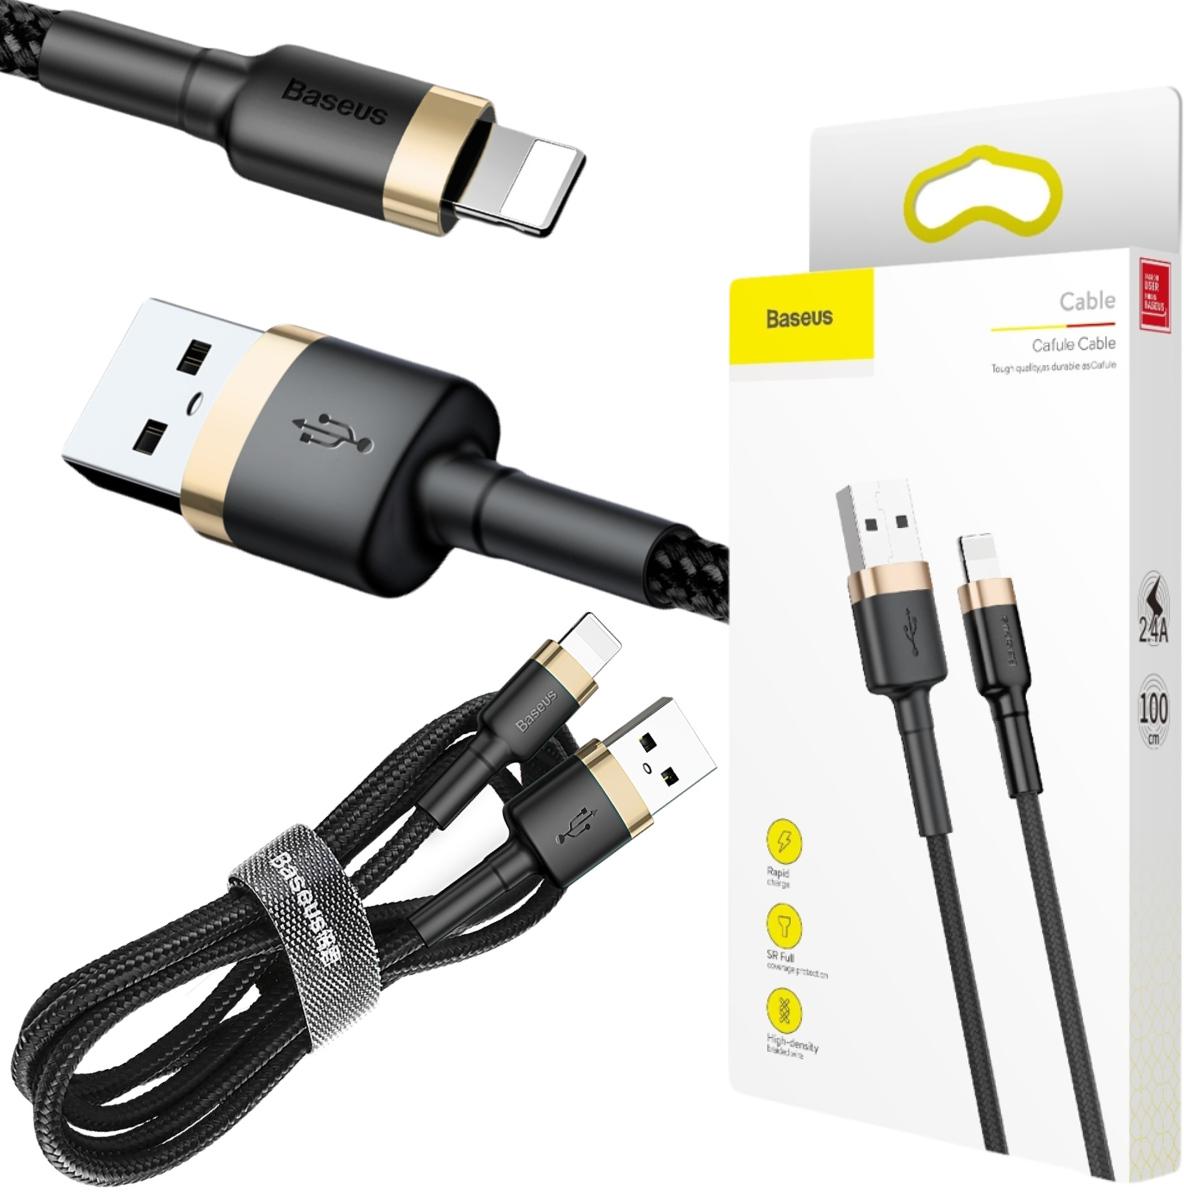 Baseus Cafule Cable nylonowy kabel USB / Lightning QC 3.0 2.4 A 1 m CALKLF-BV1 – najważniejsze cechy: